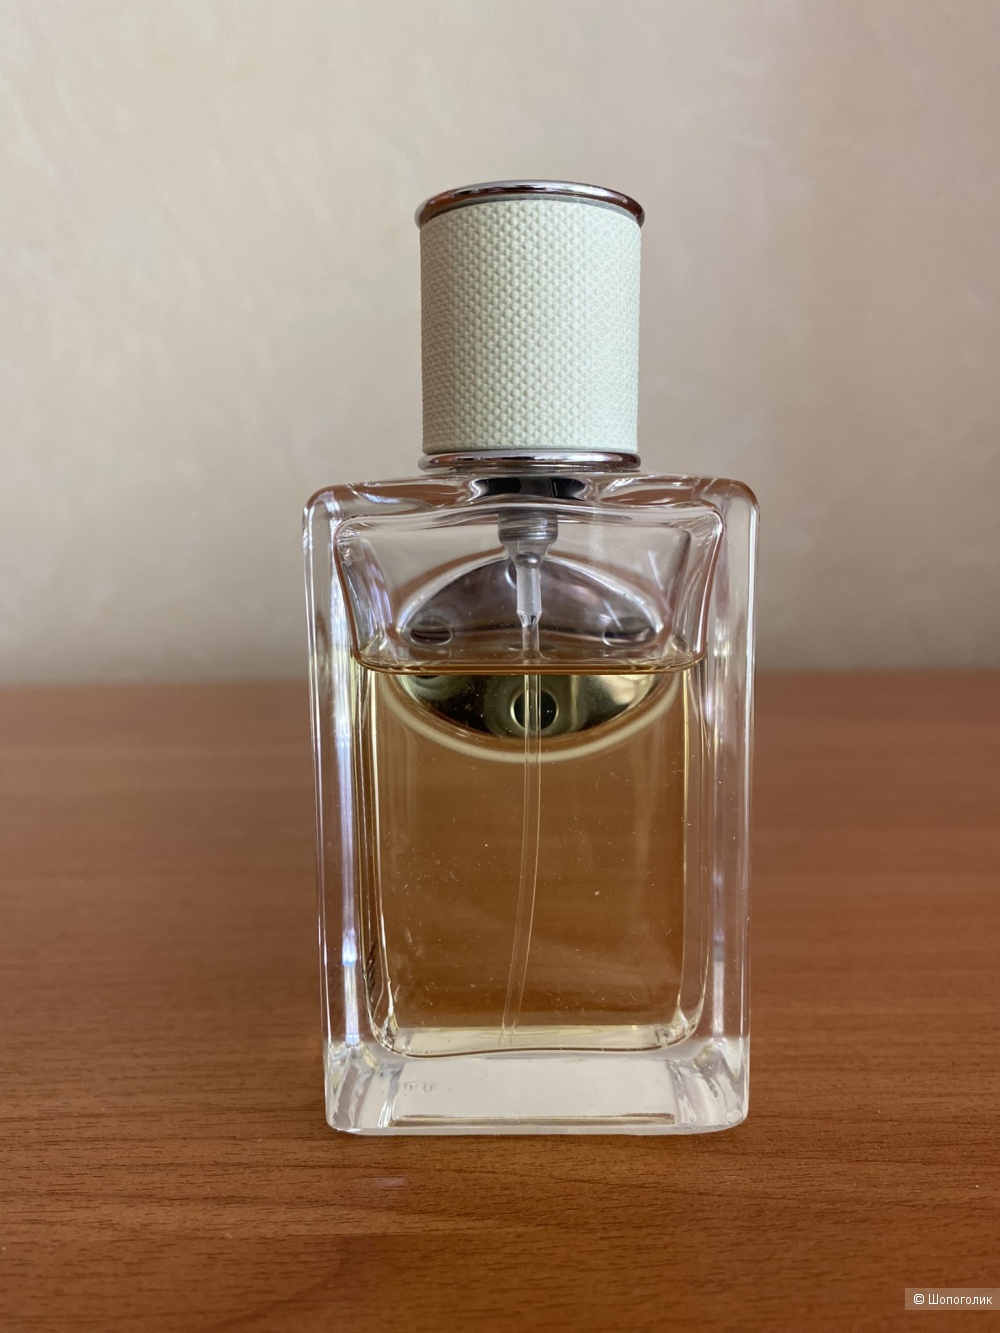 Prada Eau De Parfum "Infusion D'Iris" 40/50 ml